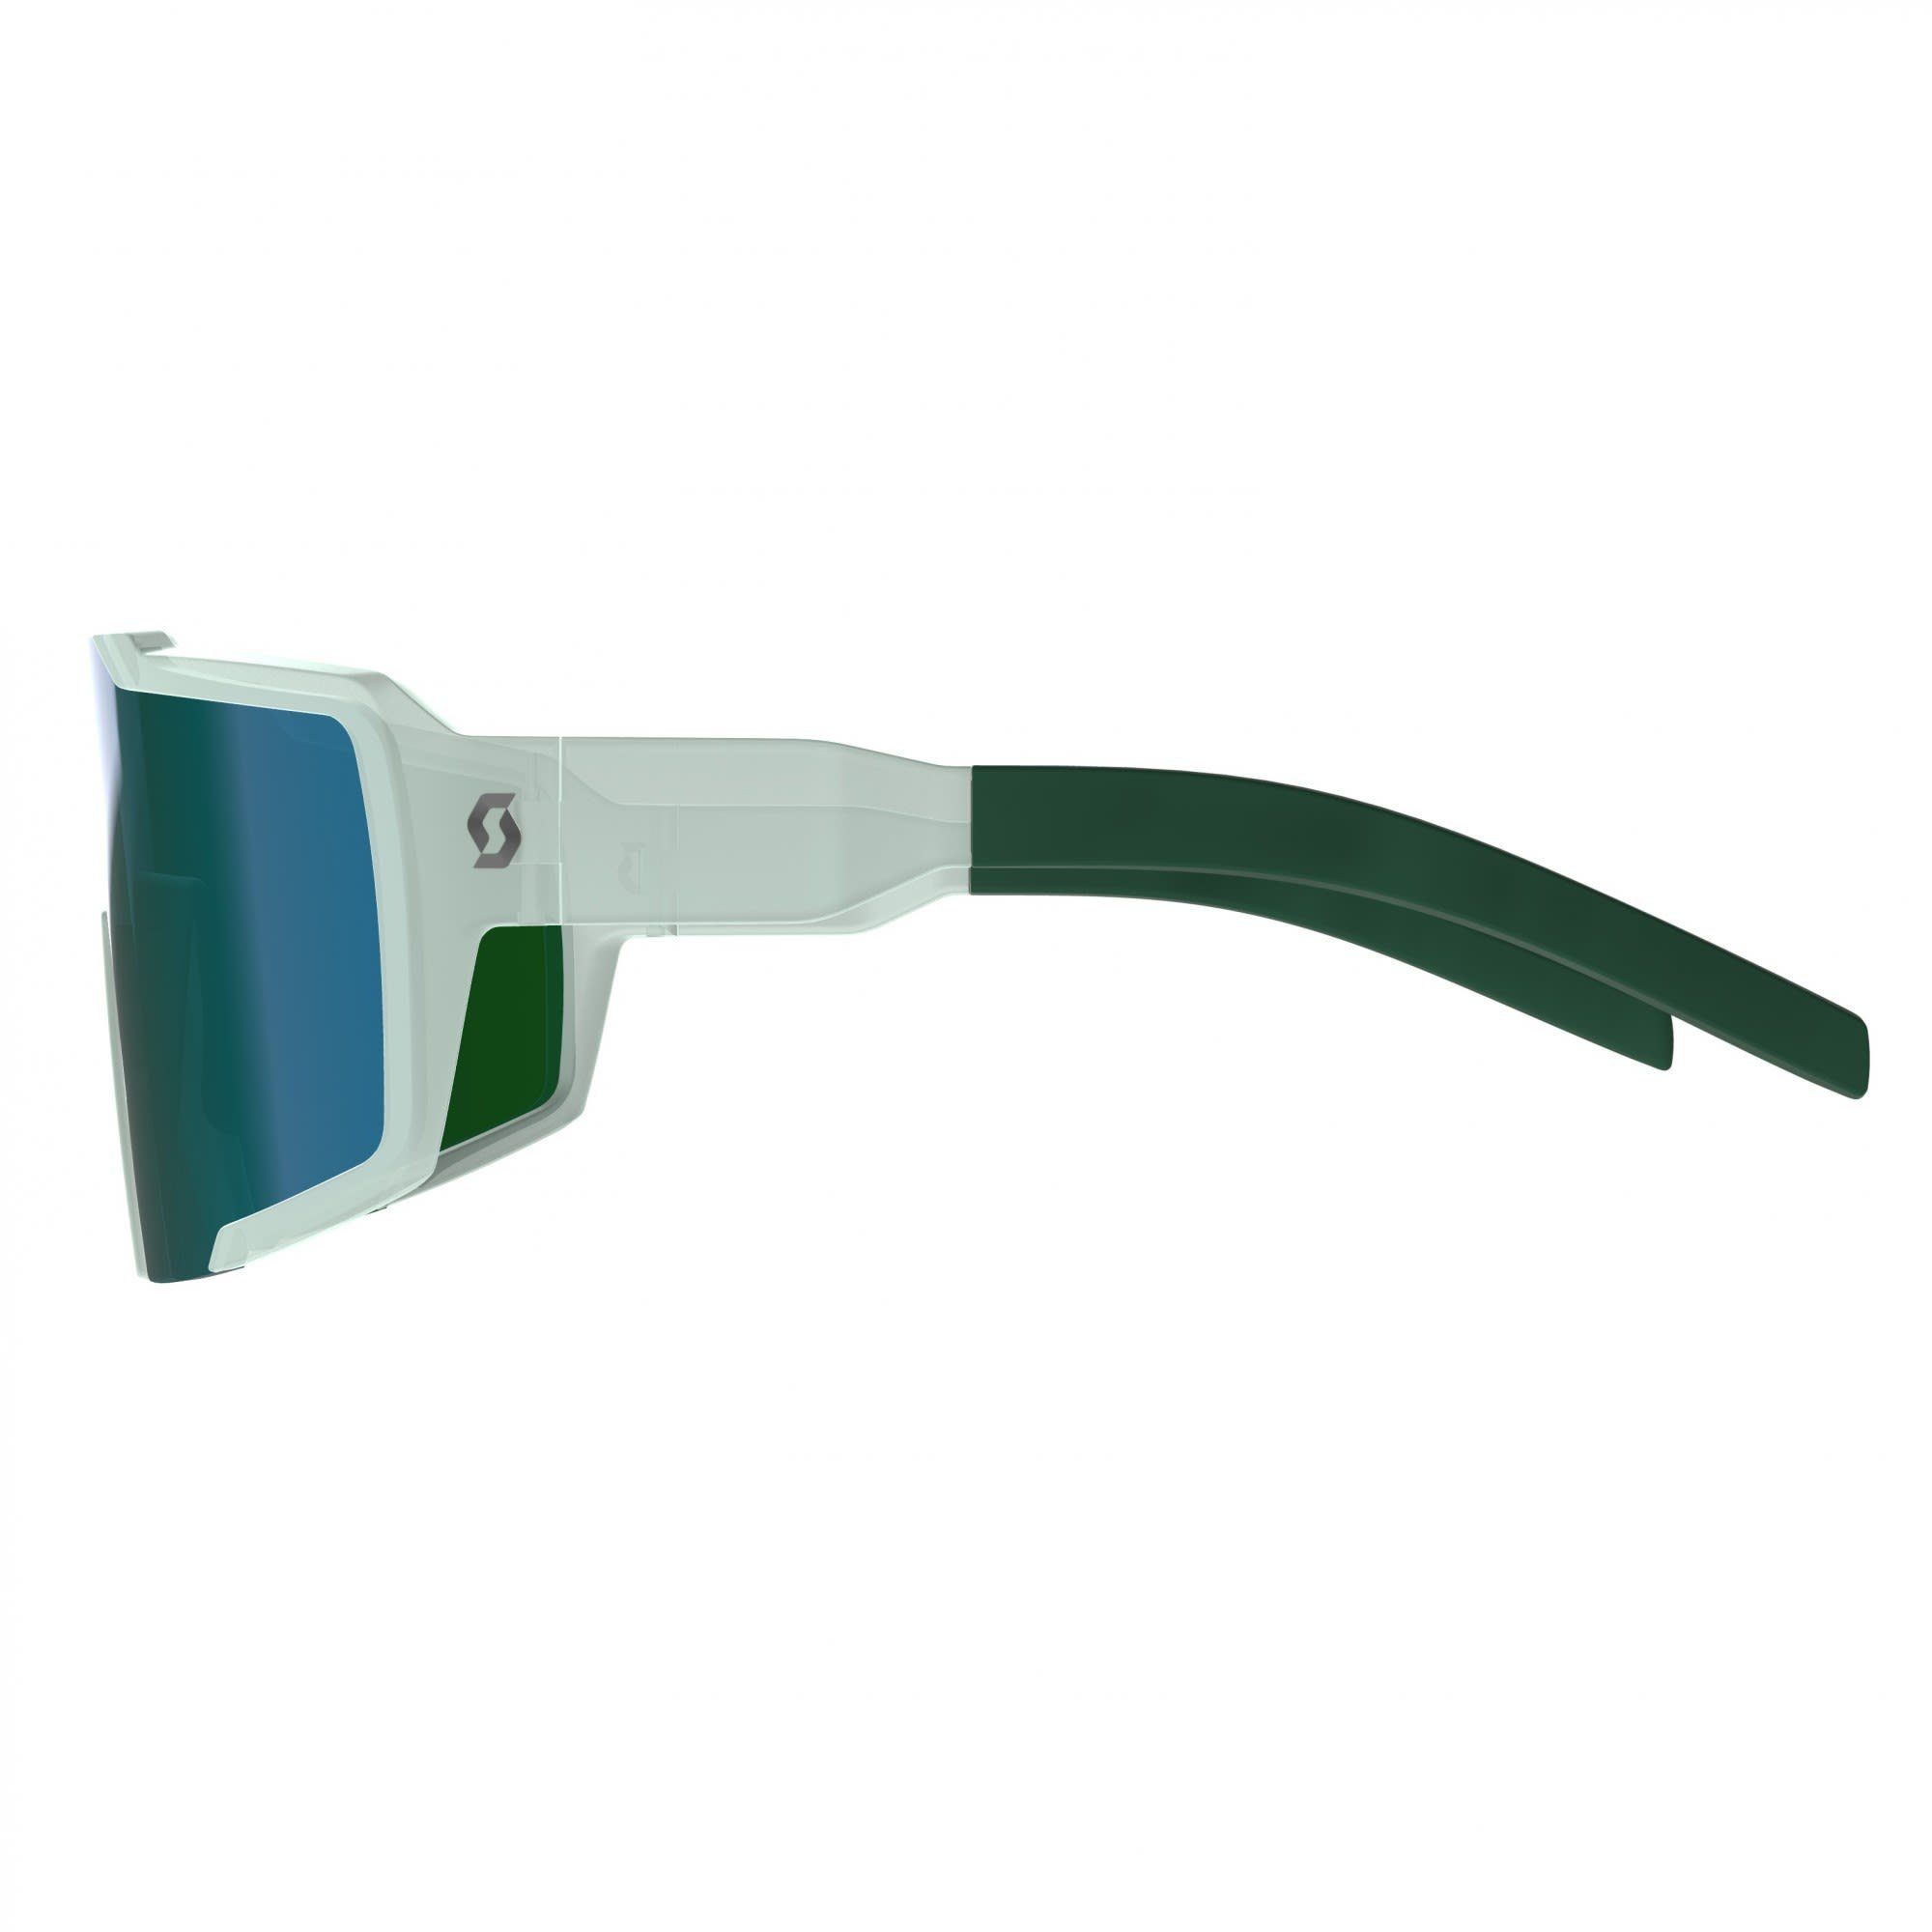 Scott Fahrradbrille Green Chrome Accessoires Mineral Scott Shield Blue - Sunglasses